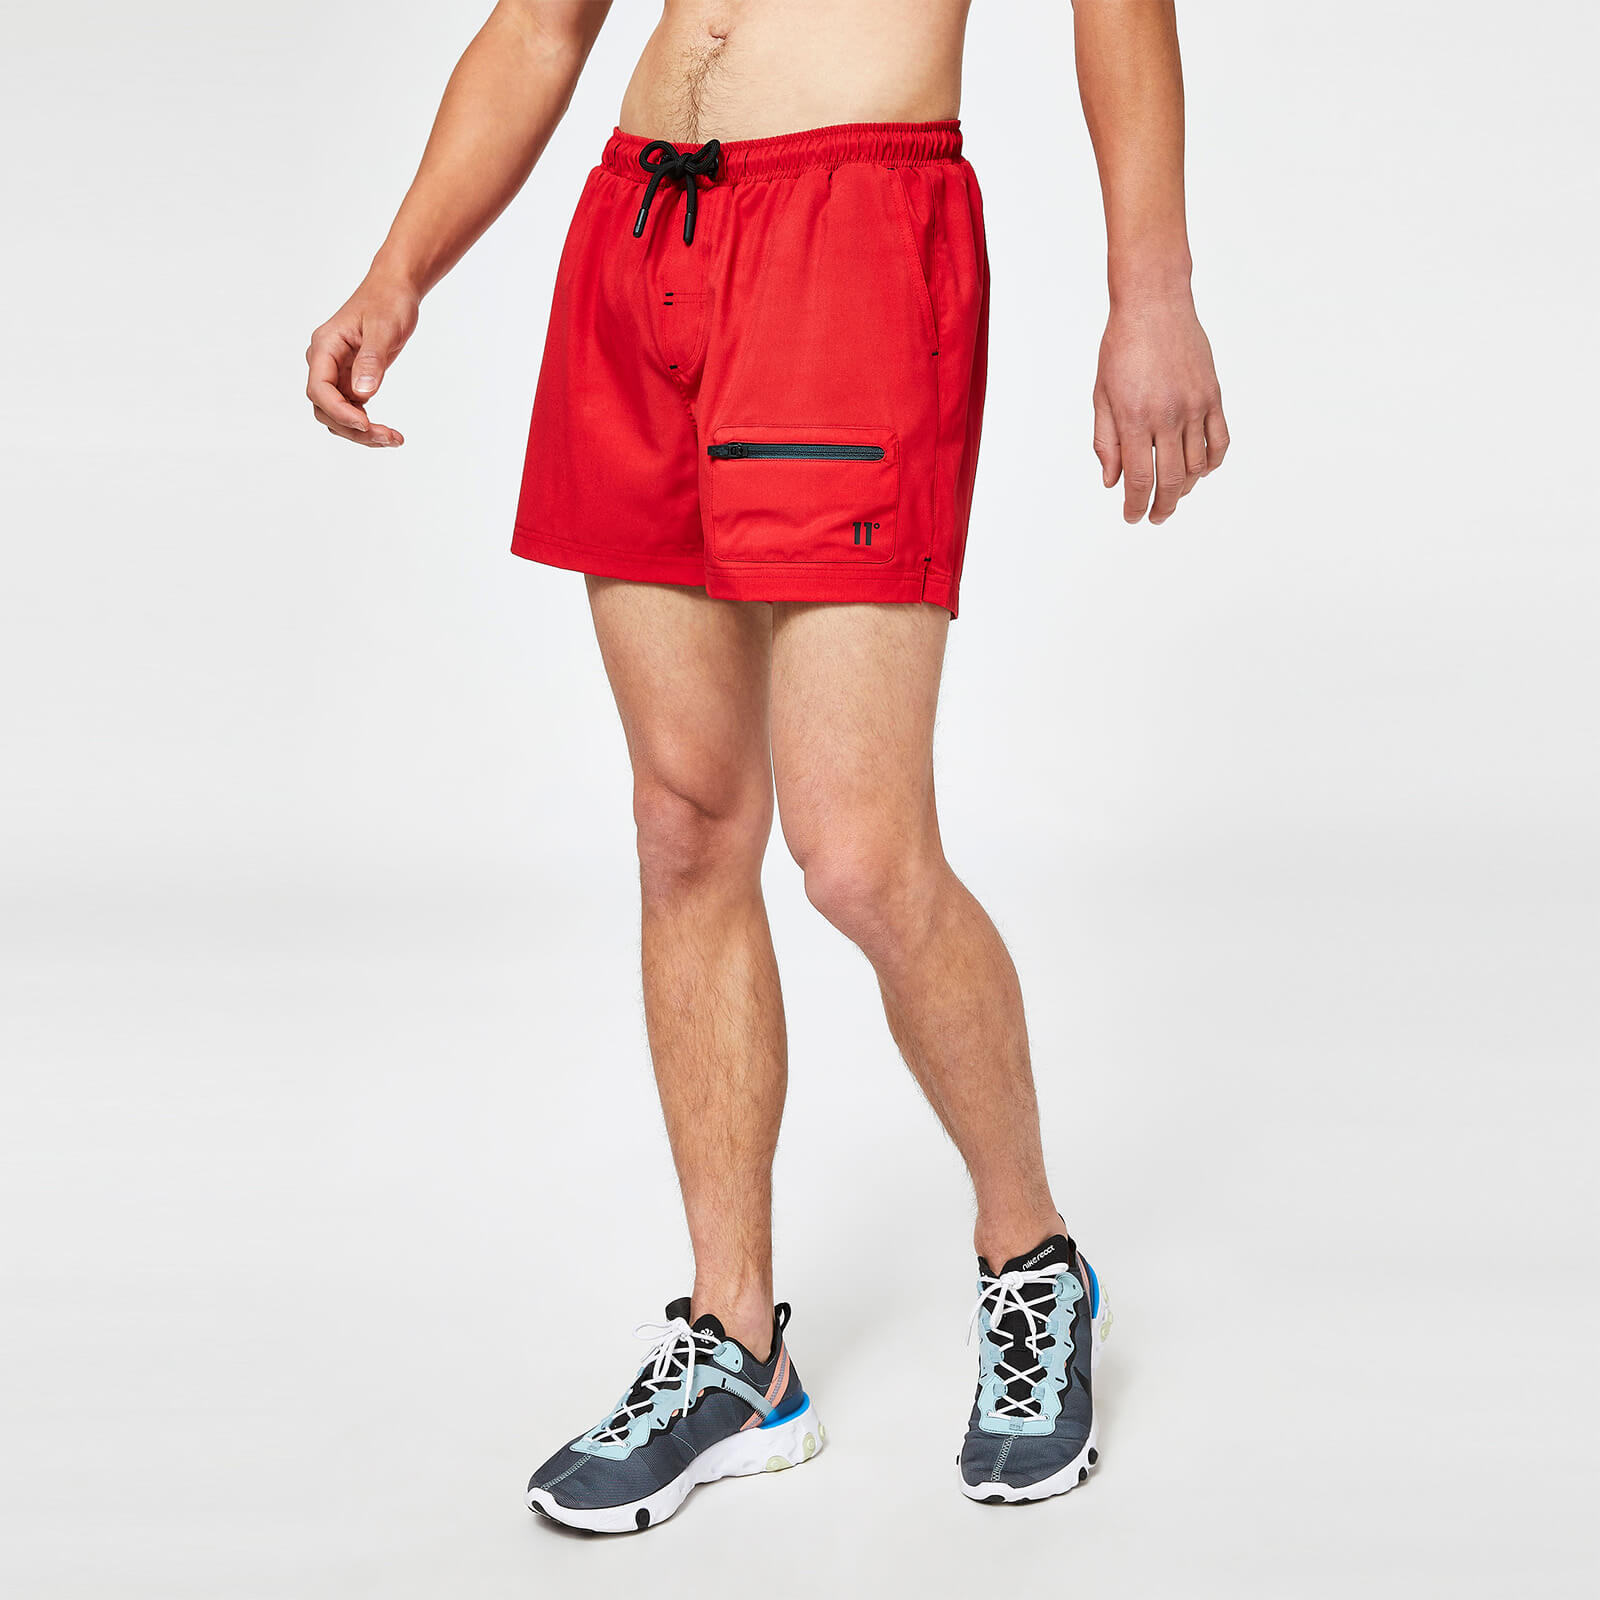 11 degrees zip pocket swim shorts – goji berry red - s